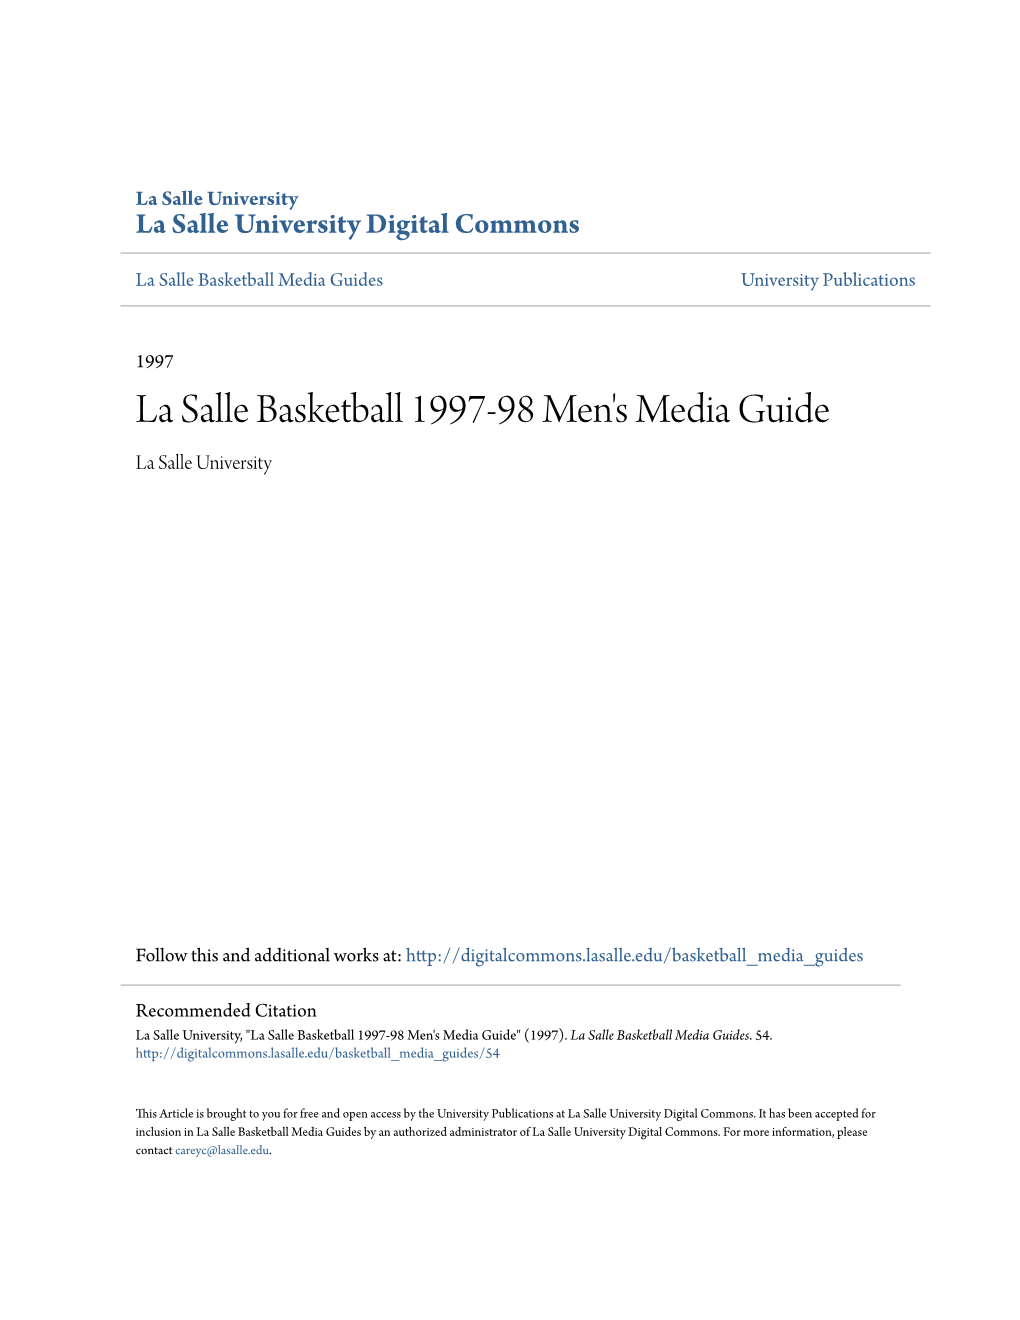 La Salle Basketball 1997-98 Men's Media Guide La Salle University